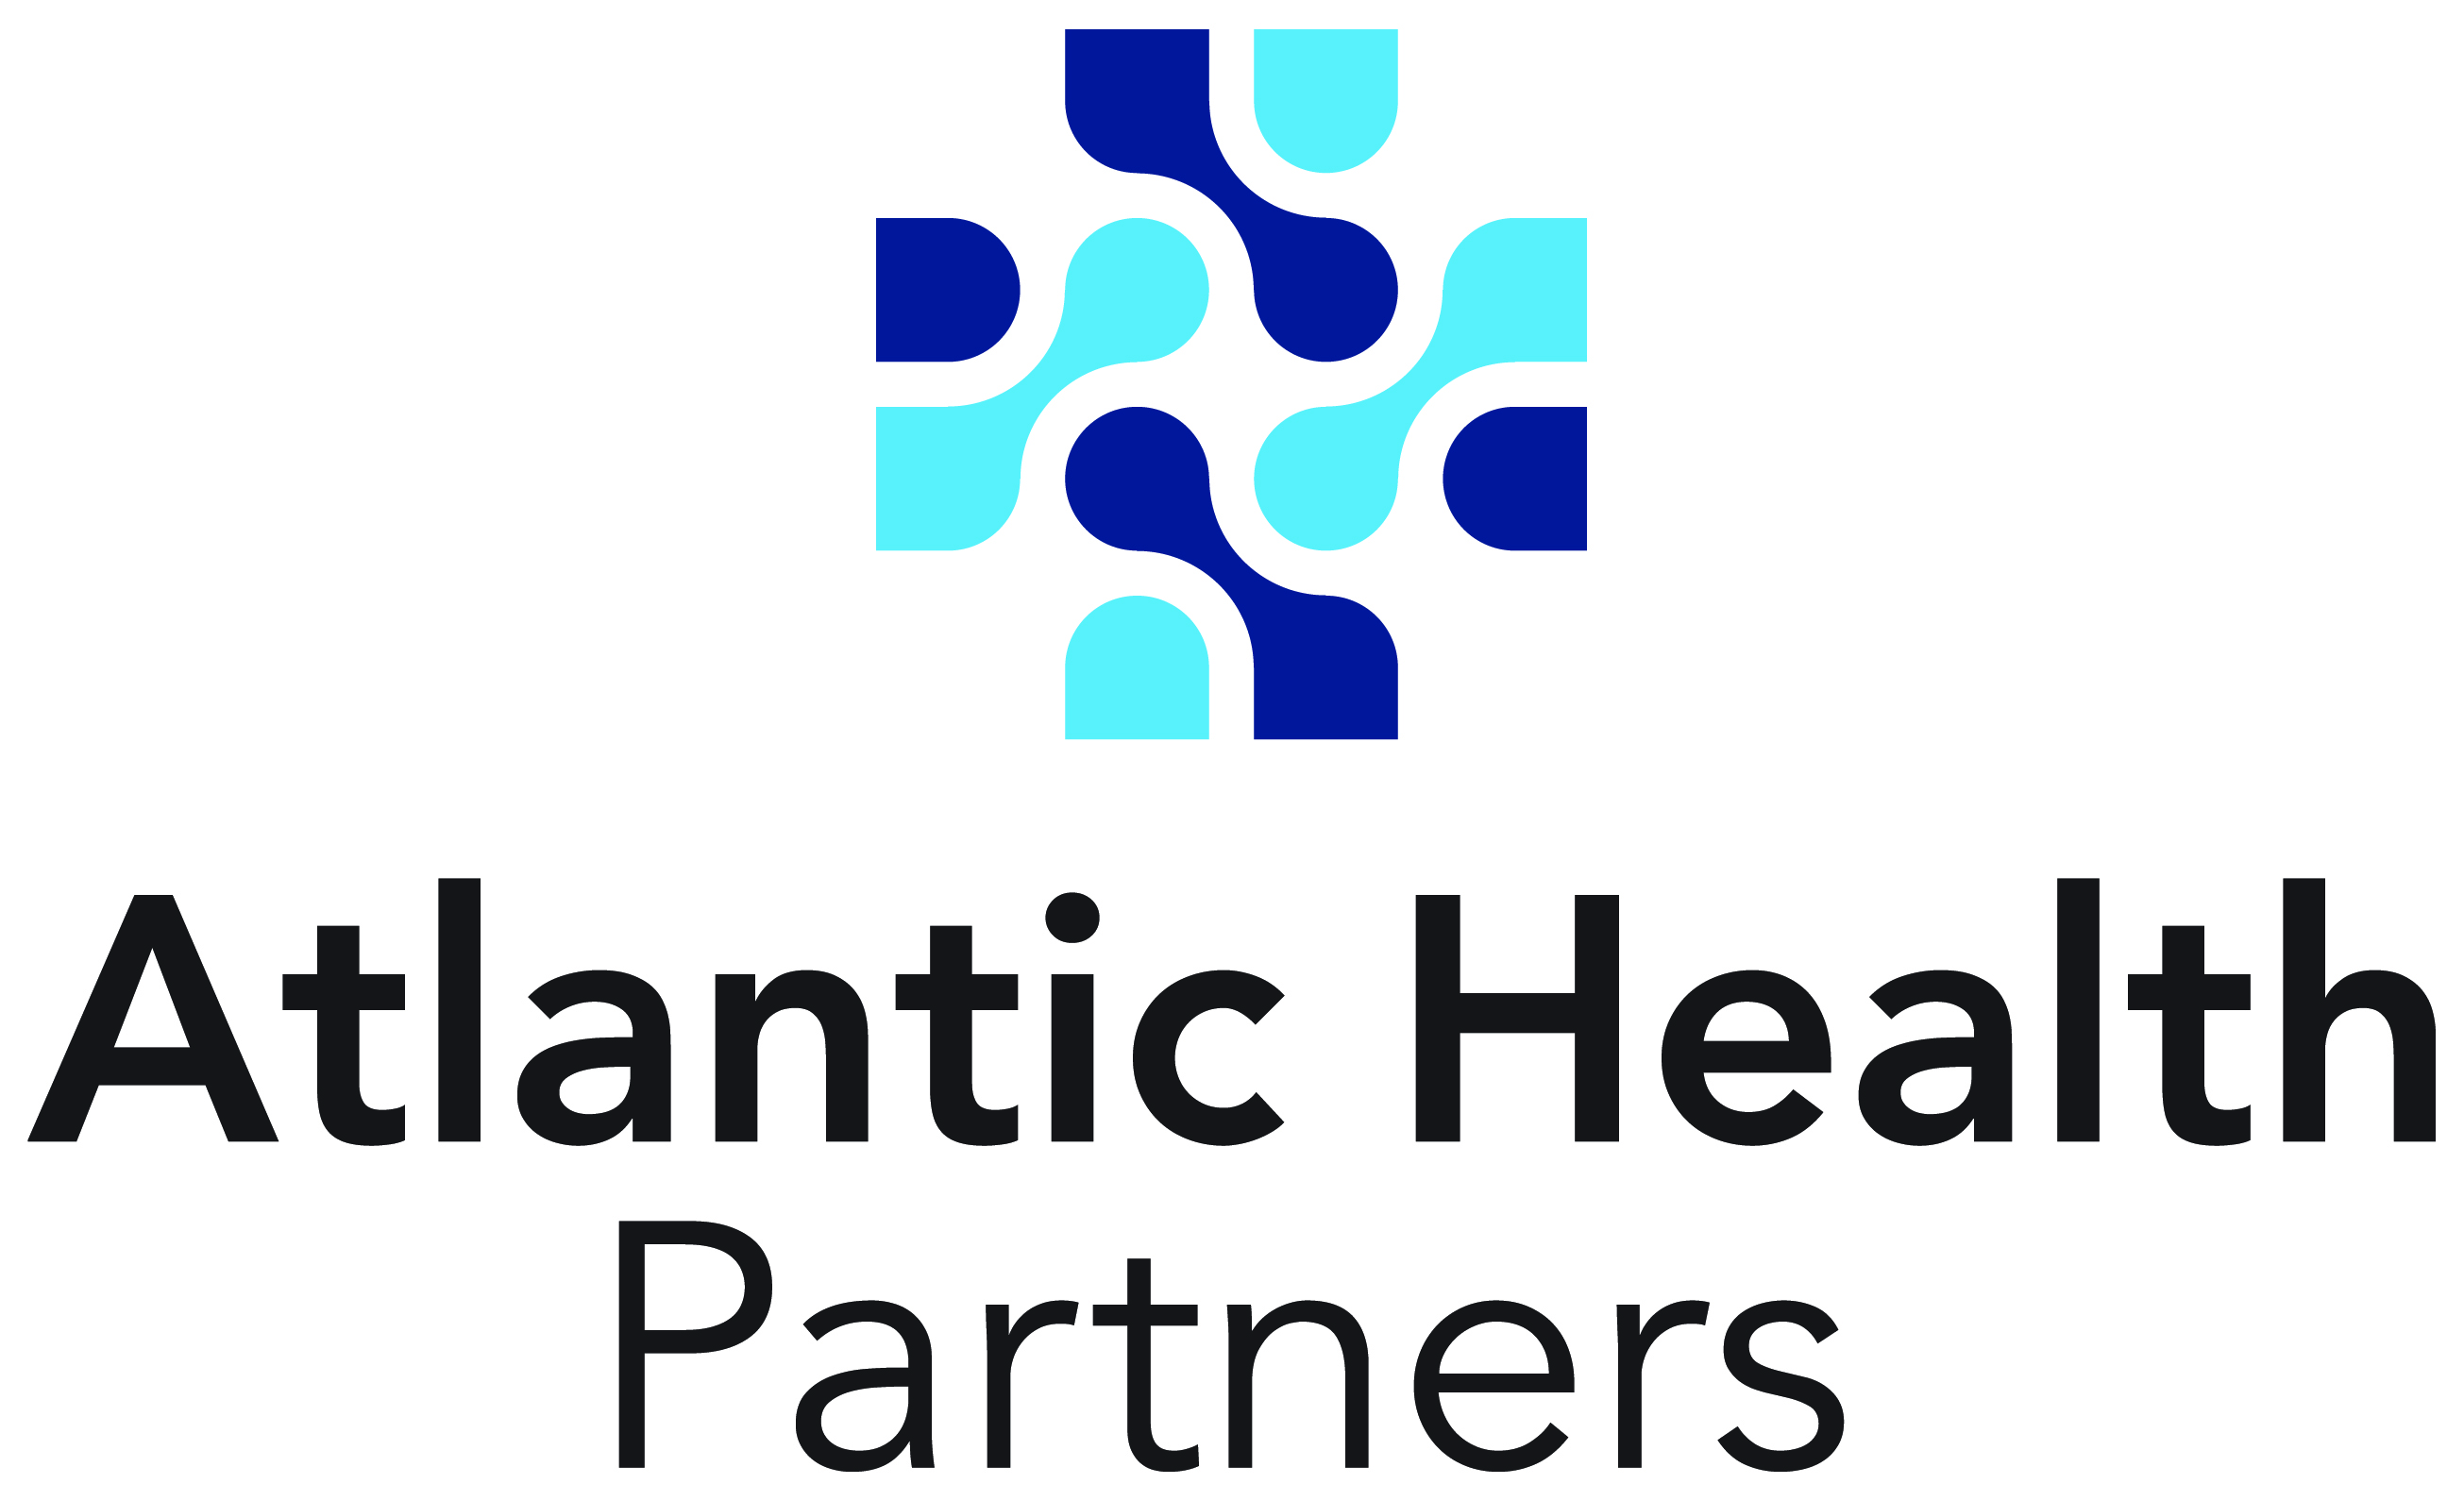 Atlantic Health Partners offers discounts on vaccines